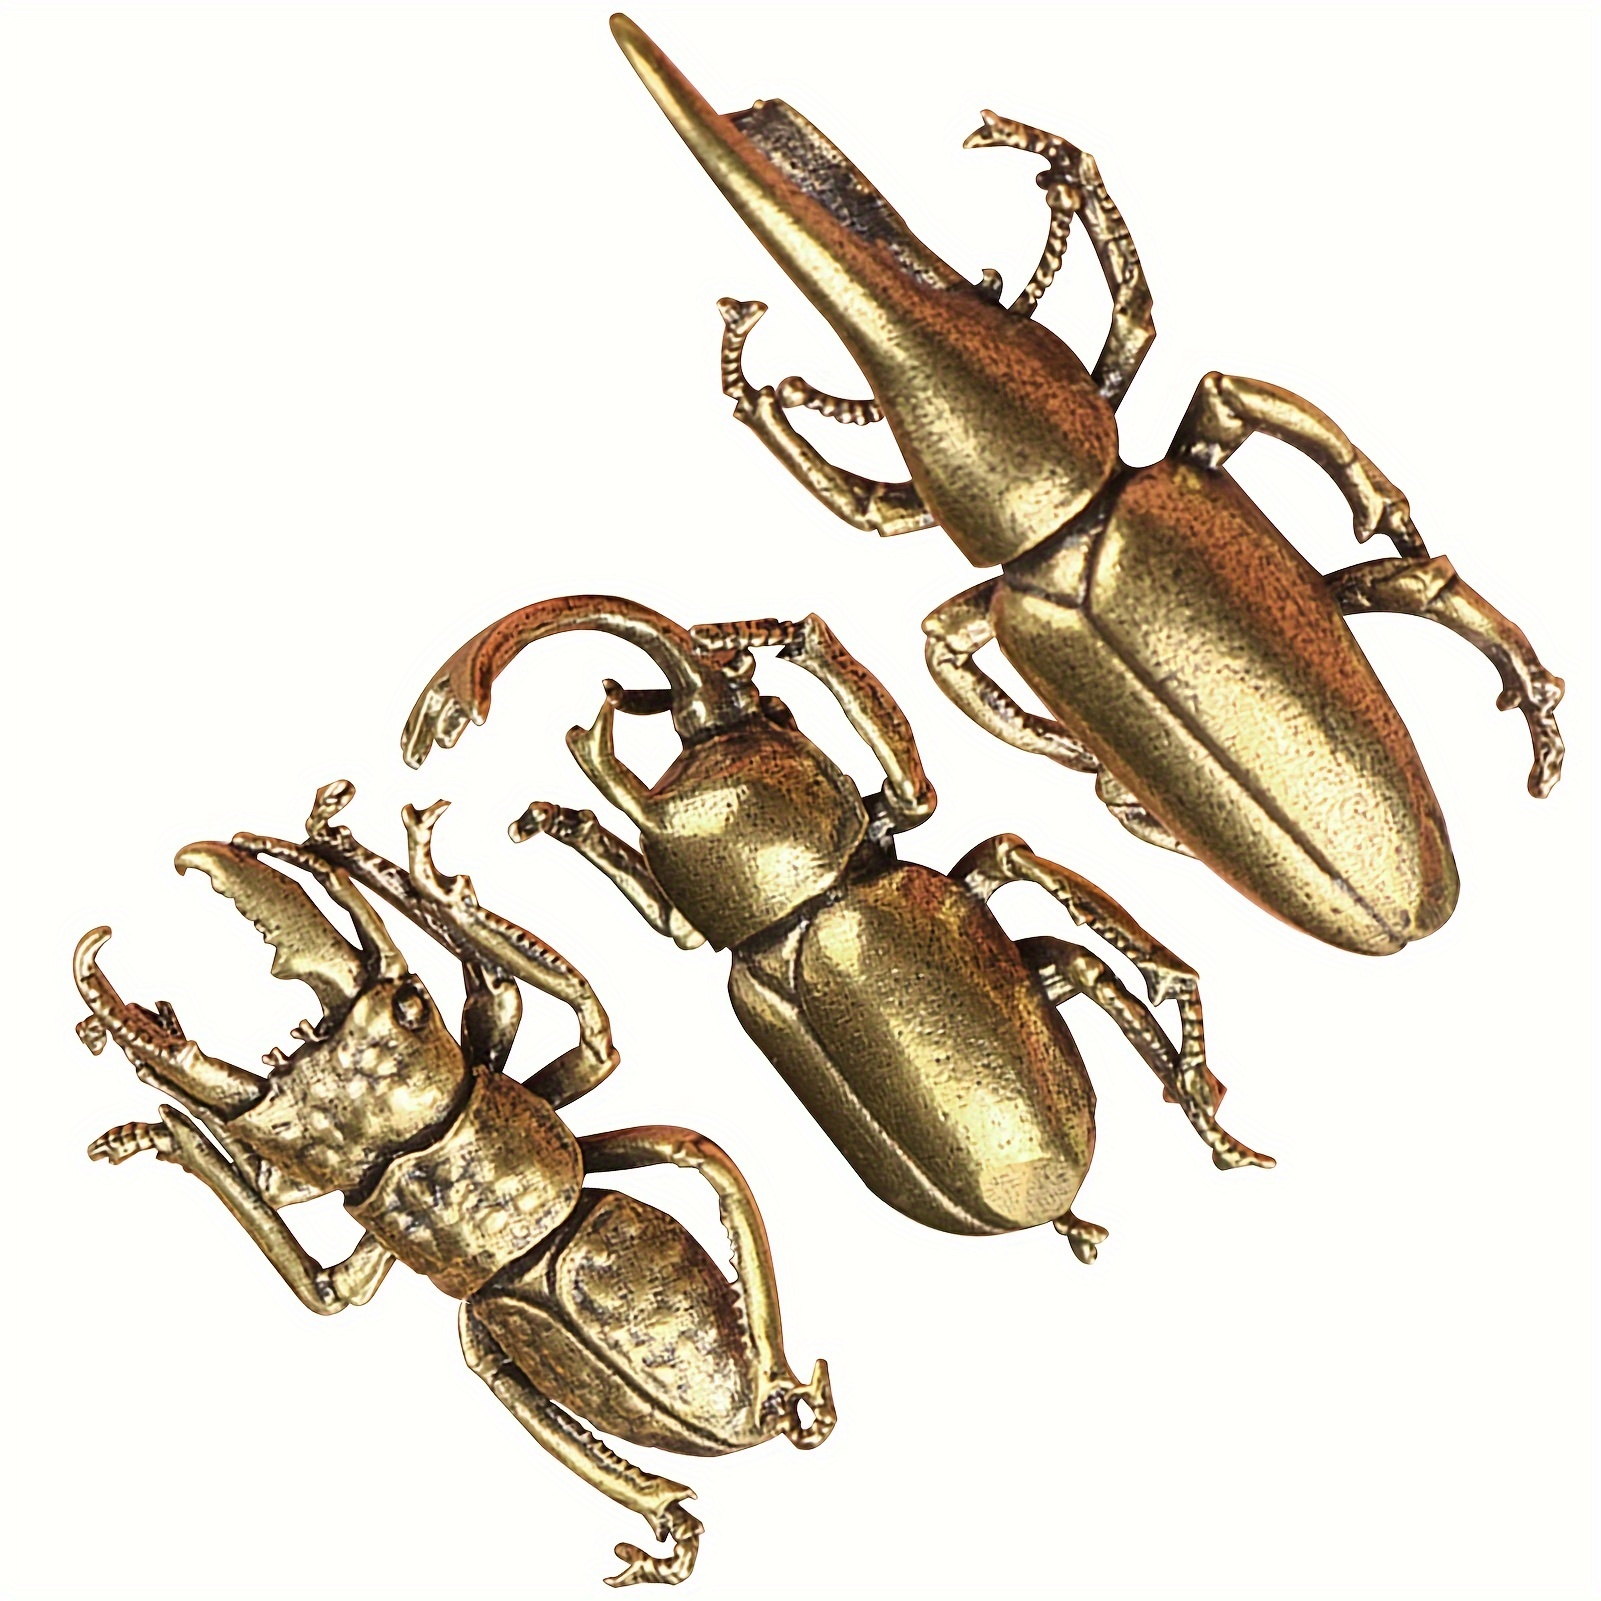 

3pcs Vintage Brass Golden Decorations, Solid Metal Insect Statues, Rustic Long Horn Bug Sculpture, Miniature Animal Figurines For Home Office Garden Desktop Decor